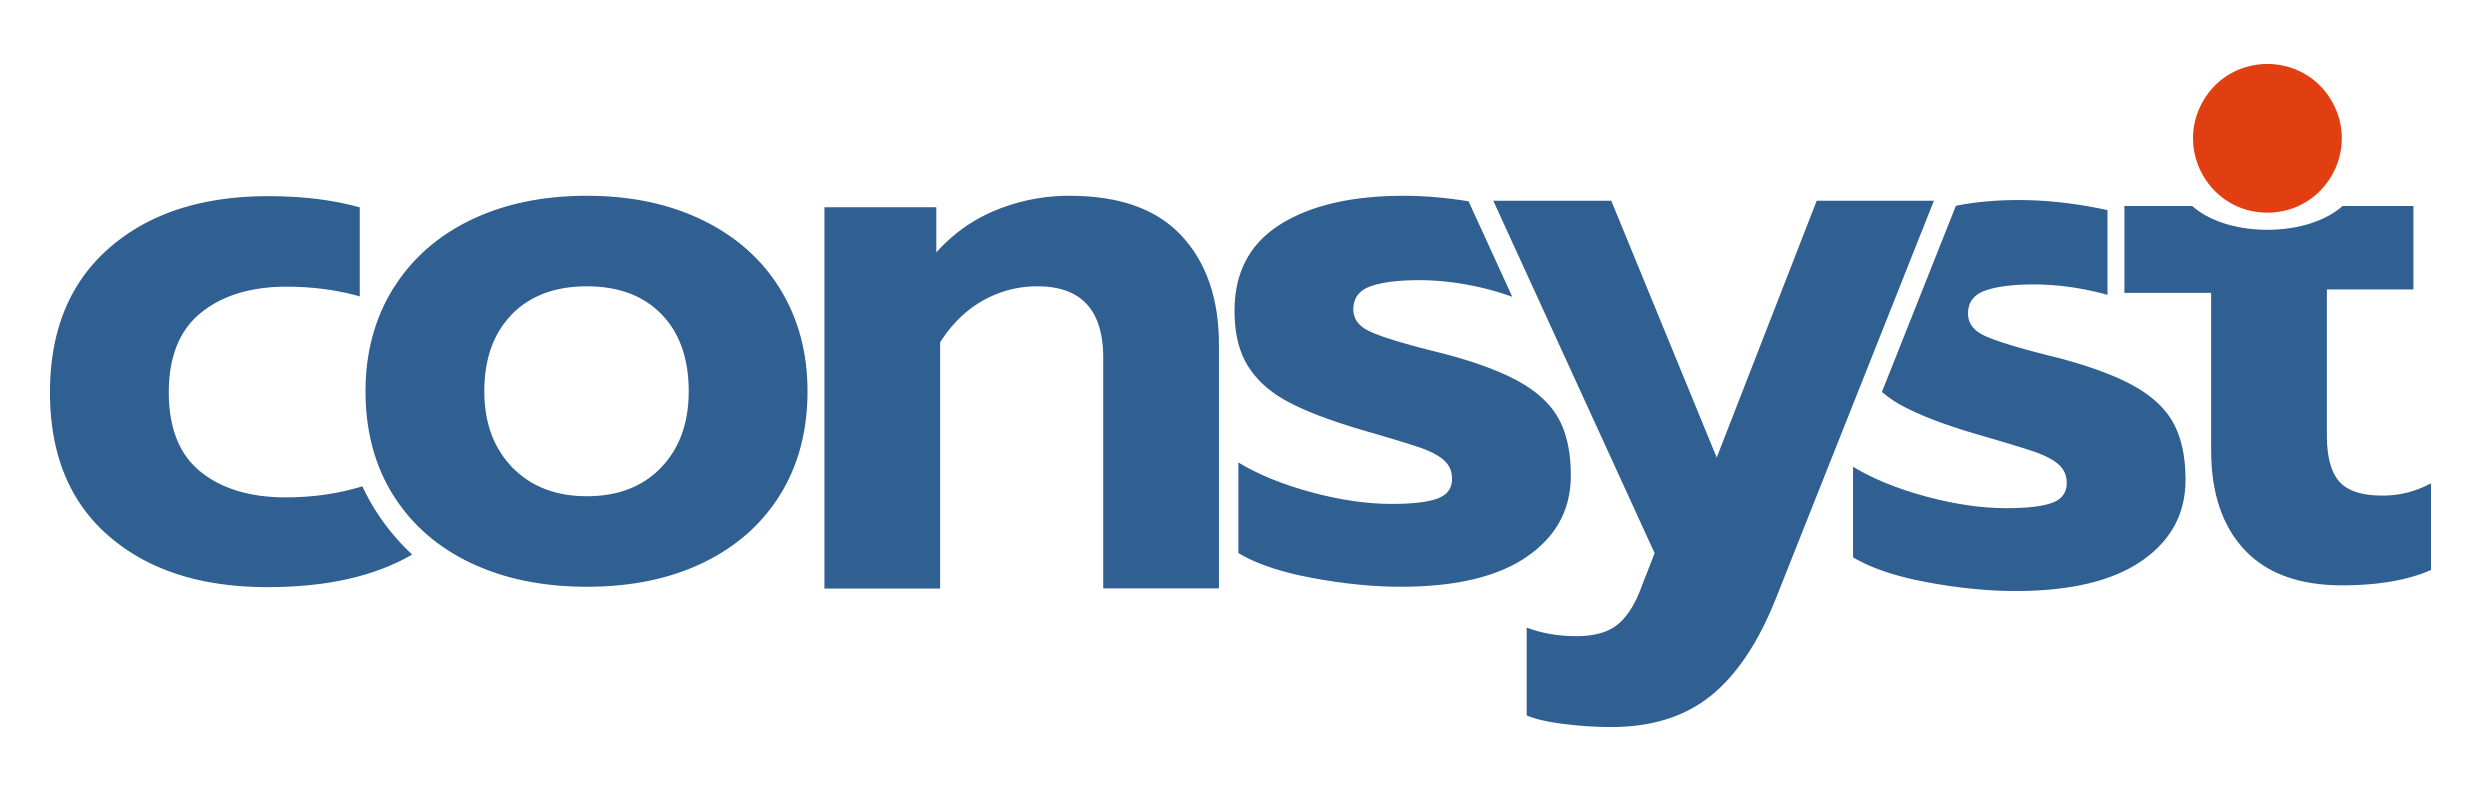 Consyst Digital Industries Pvt Ltd logo